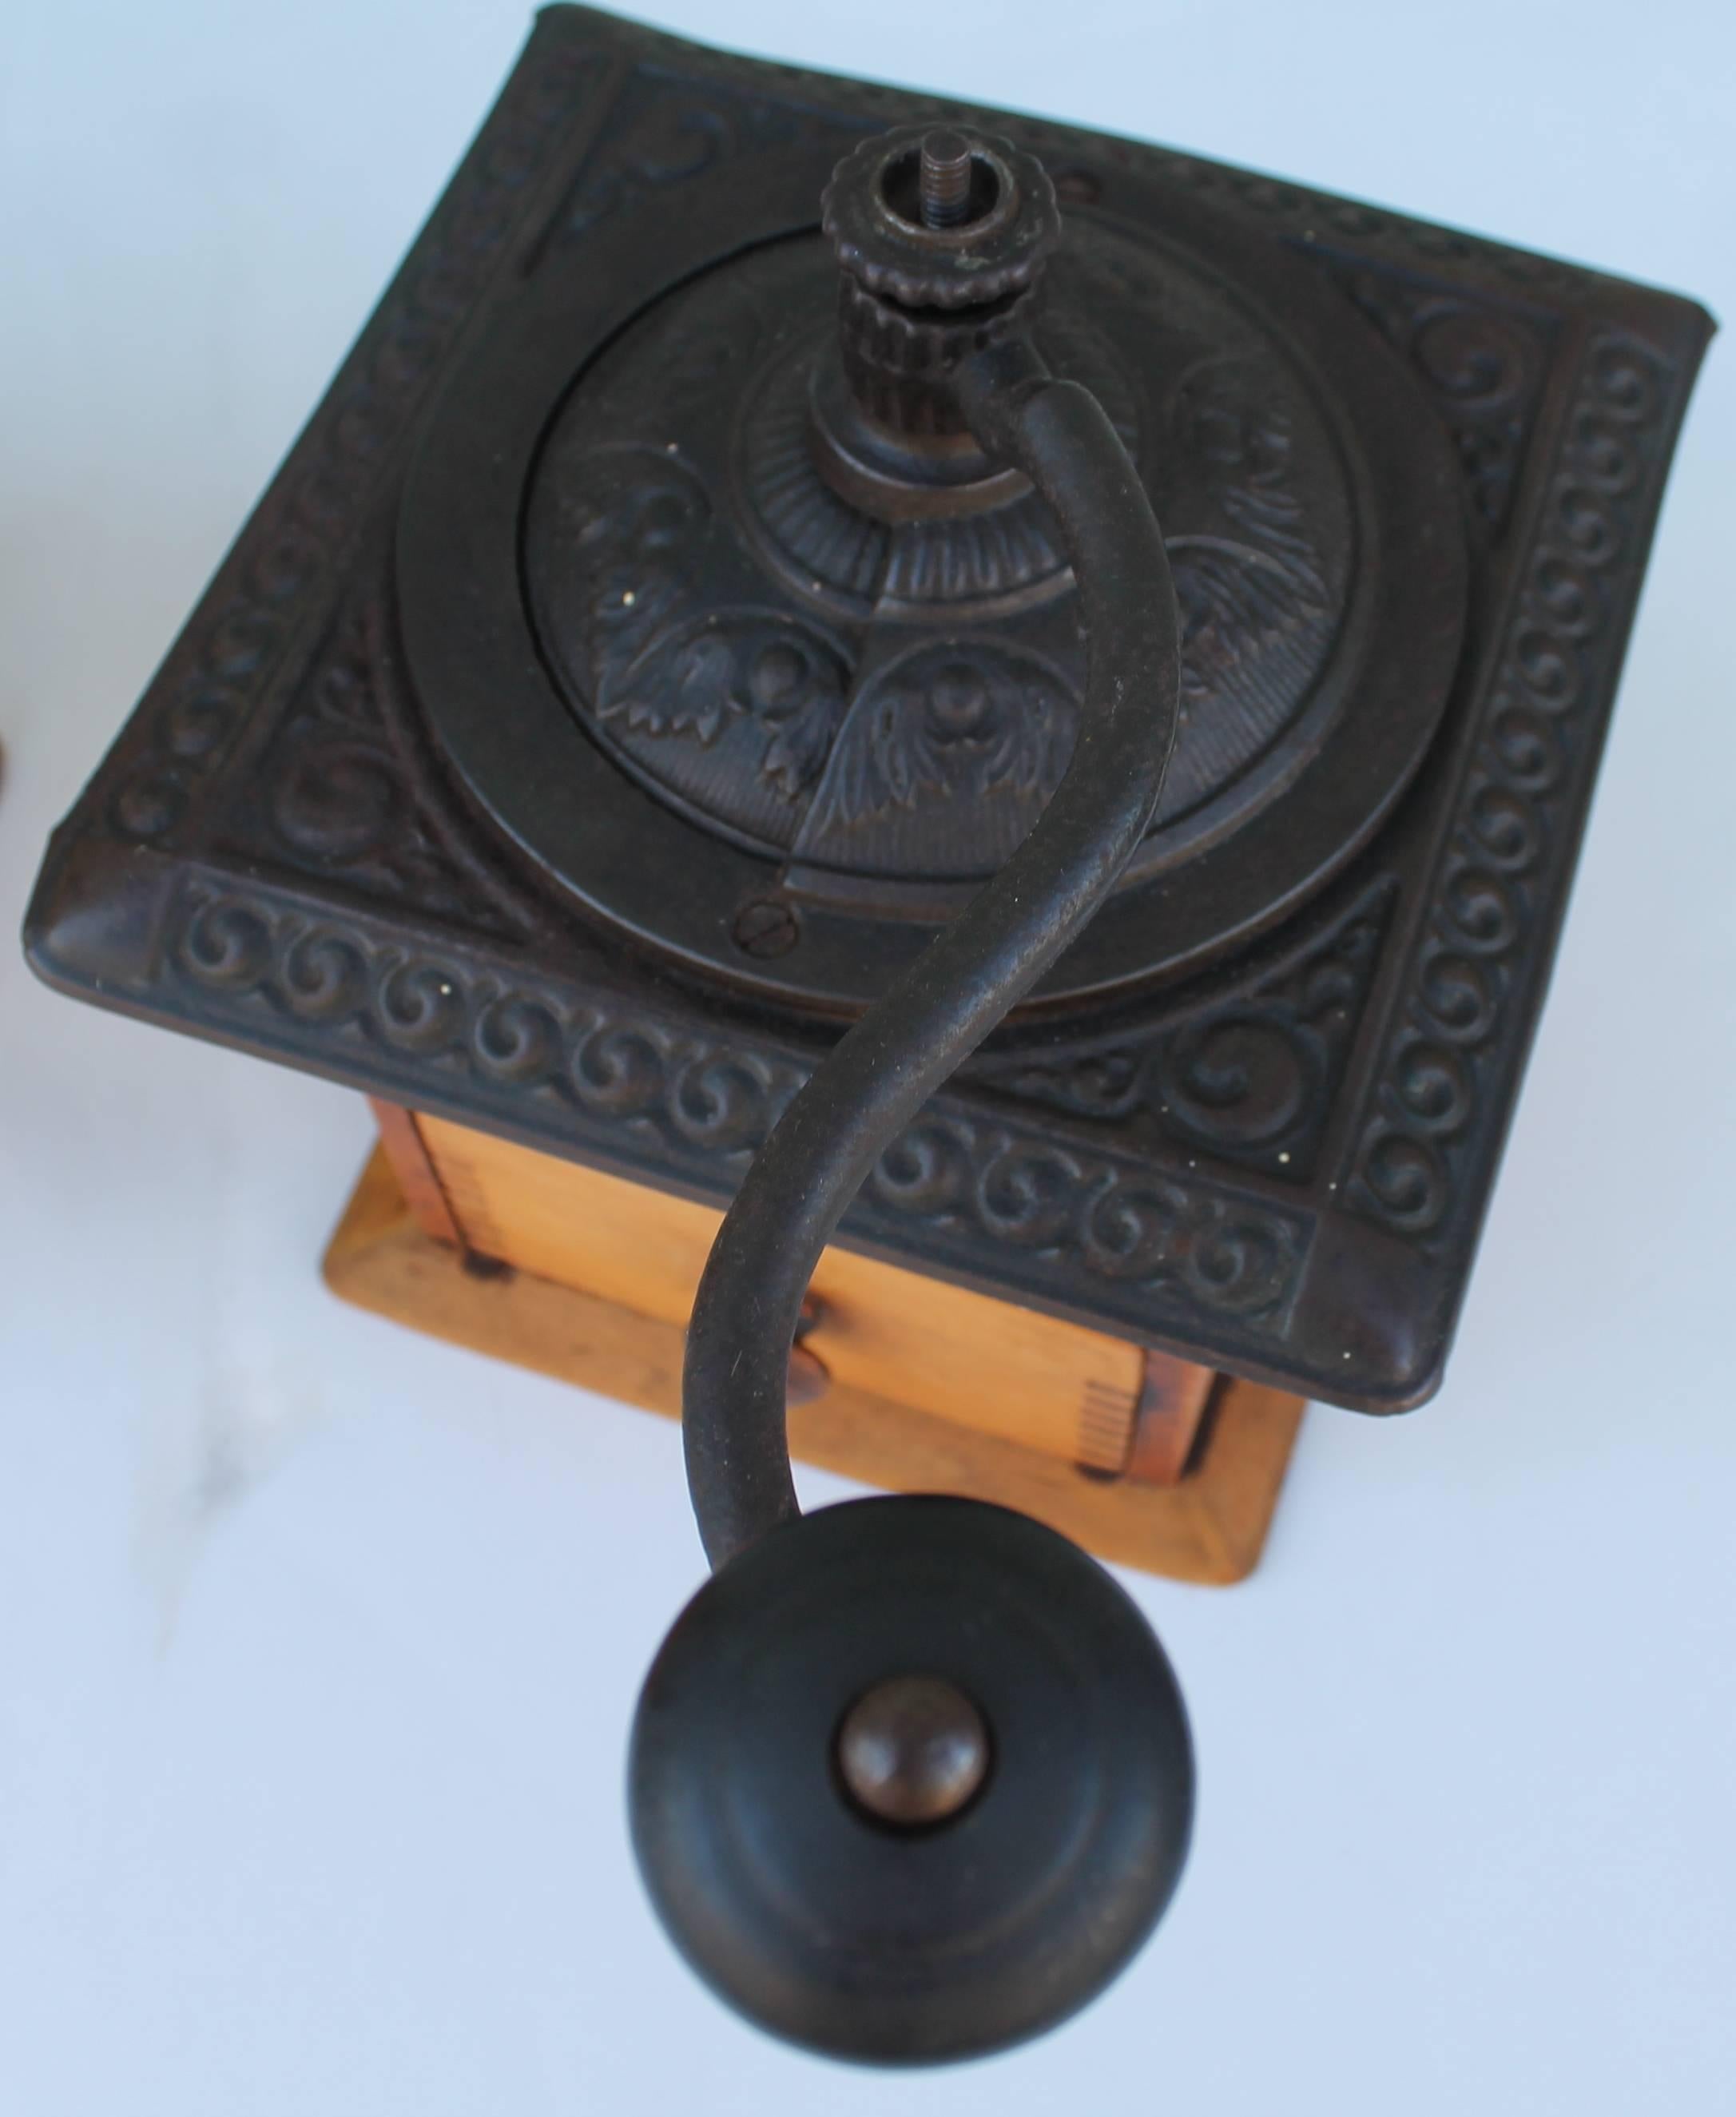 18th century coffee grinder